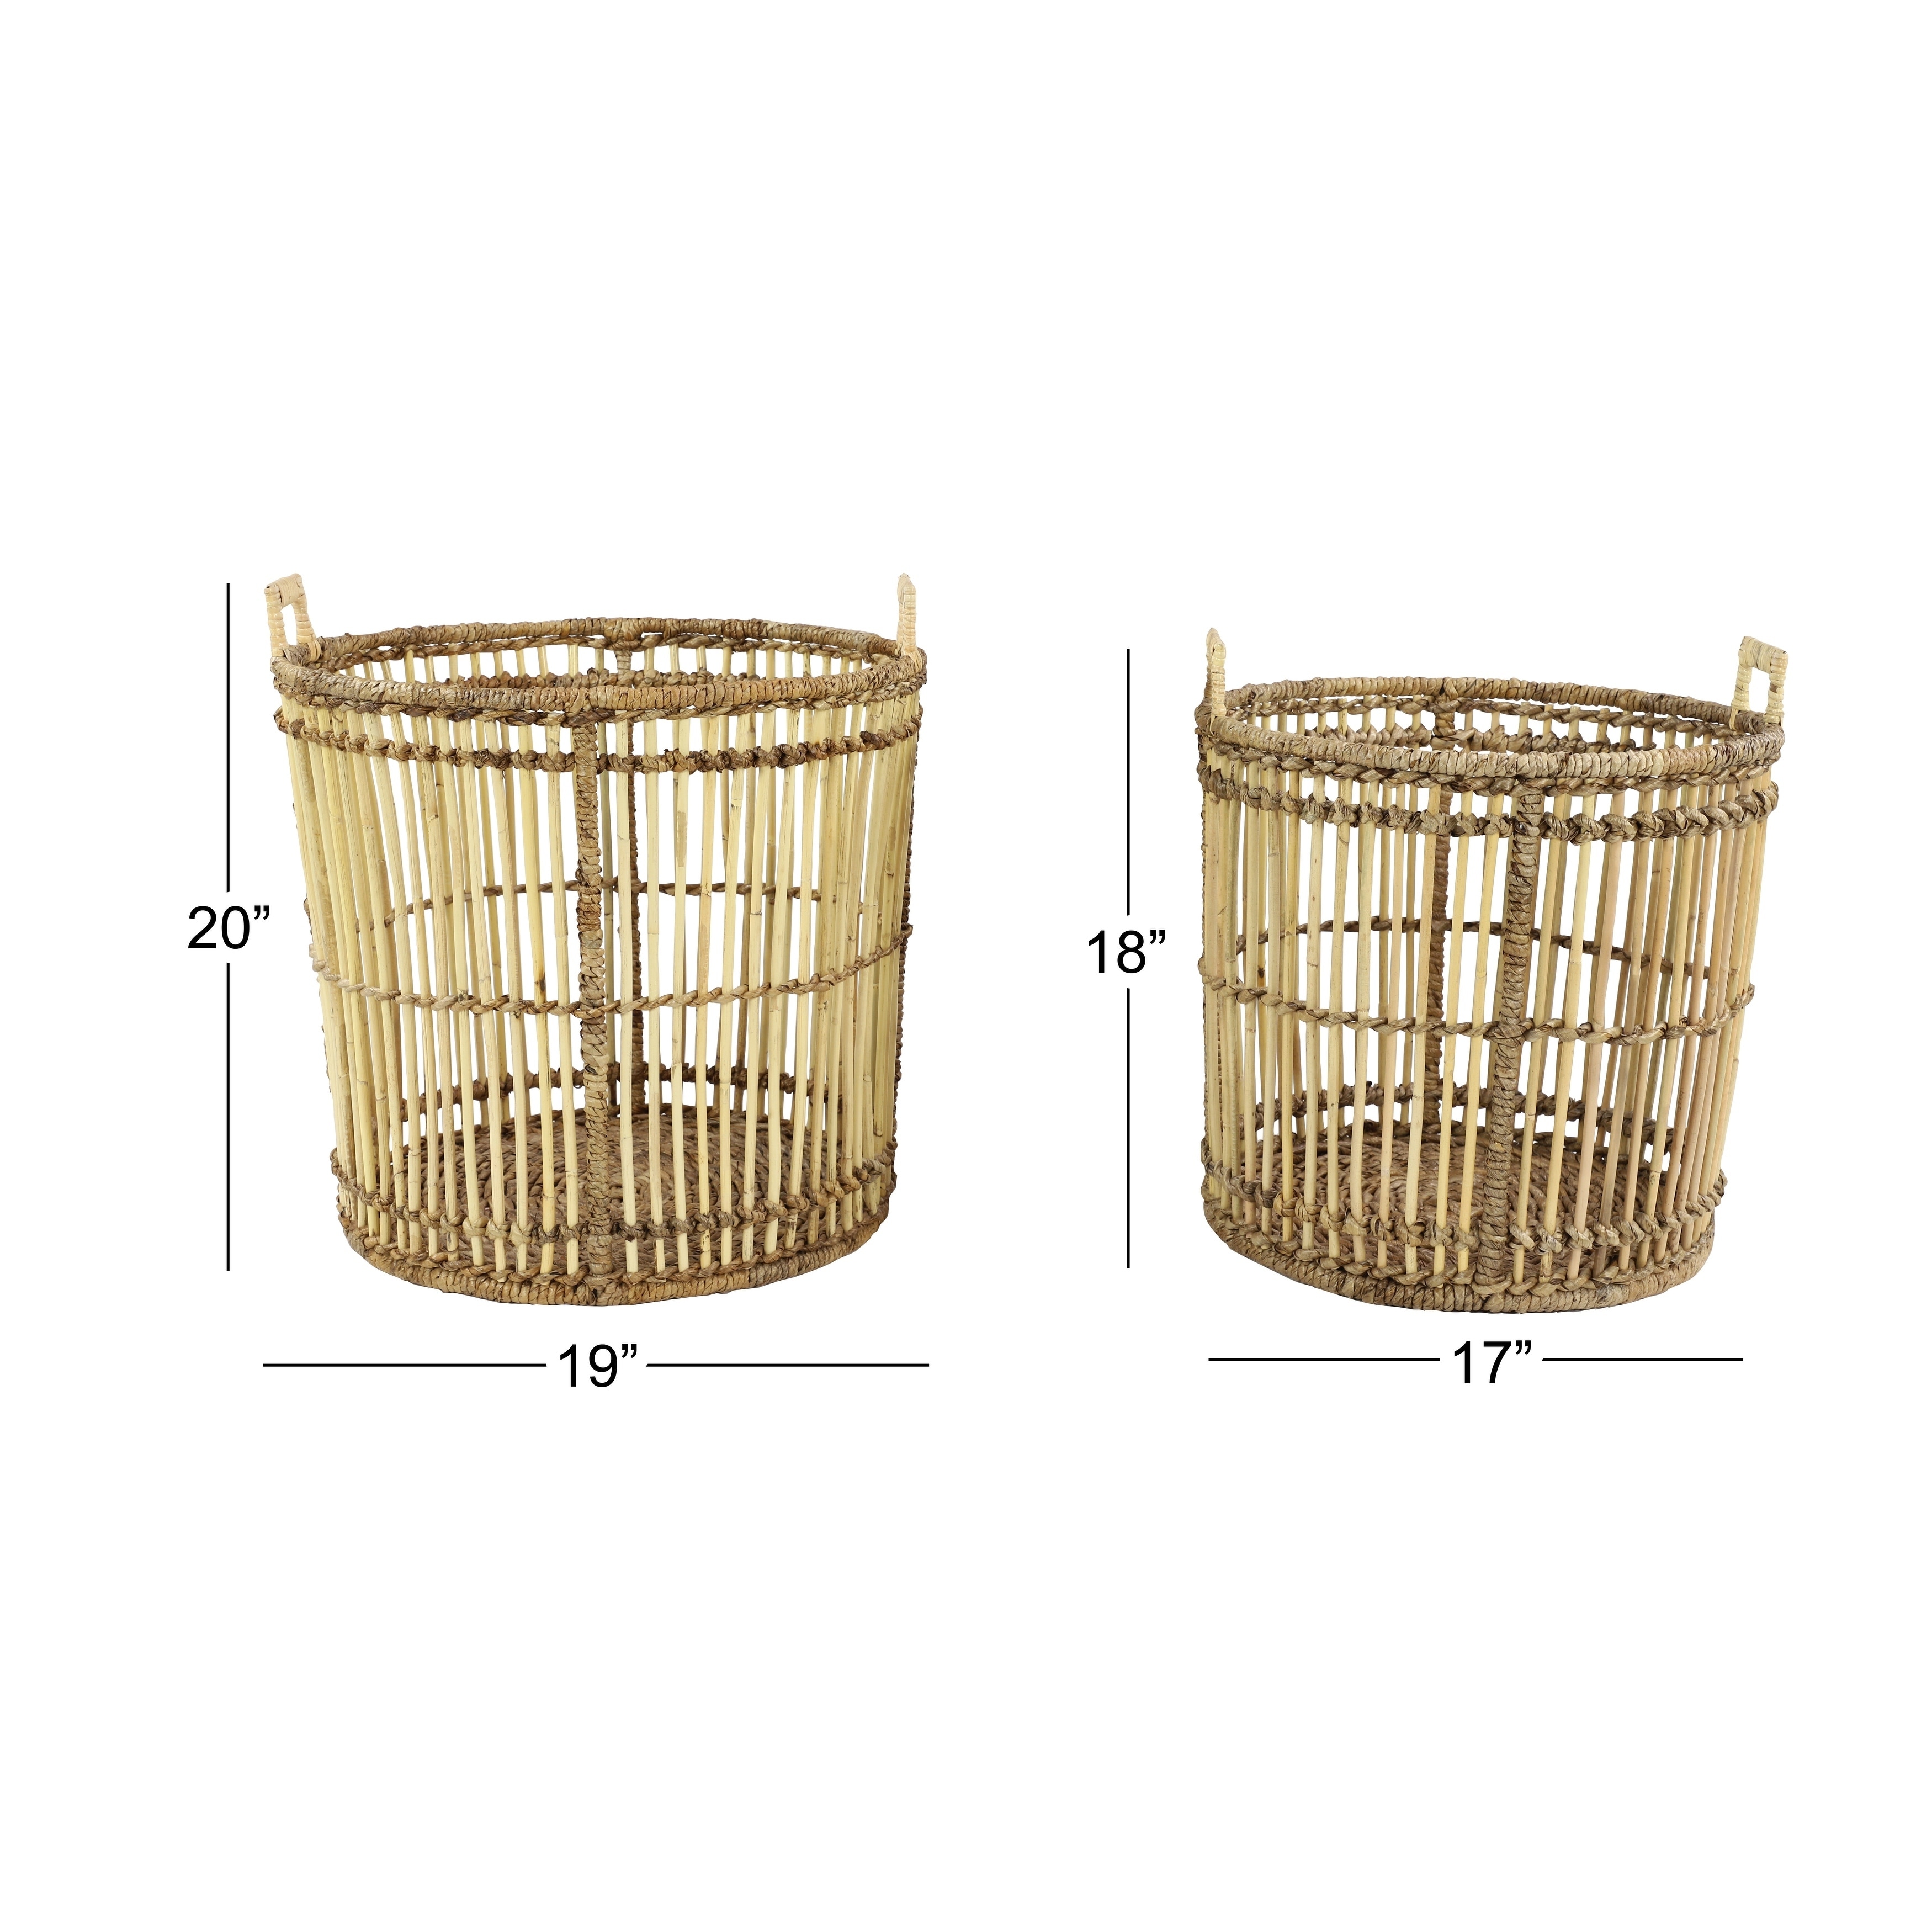 Jvl Catering Round Bamboo Basket Set Of 6 Food Fruites Storage Display Home New 